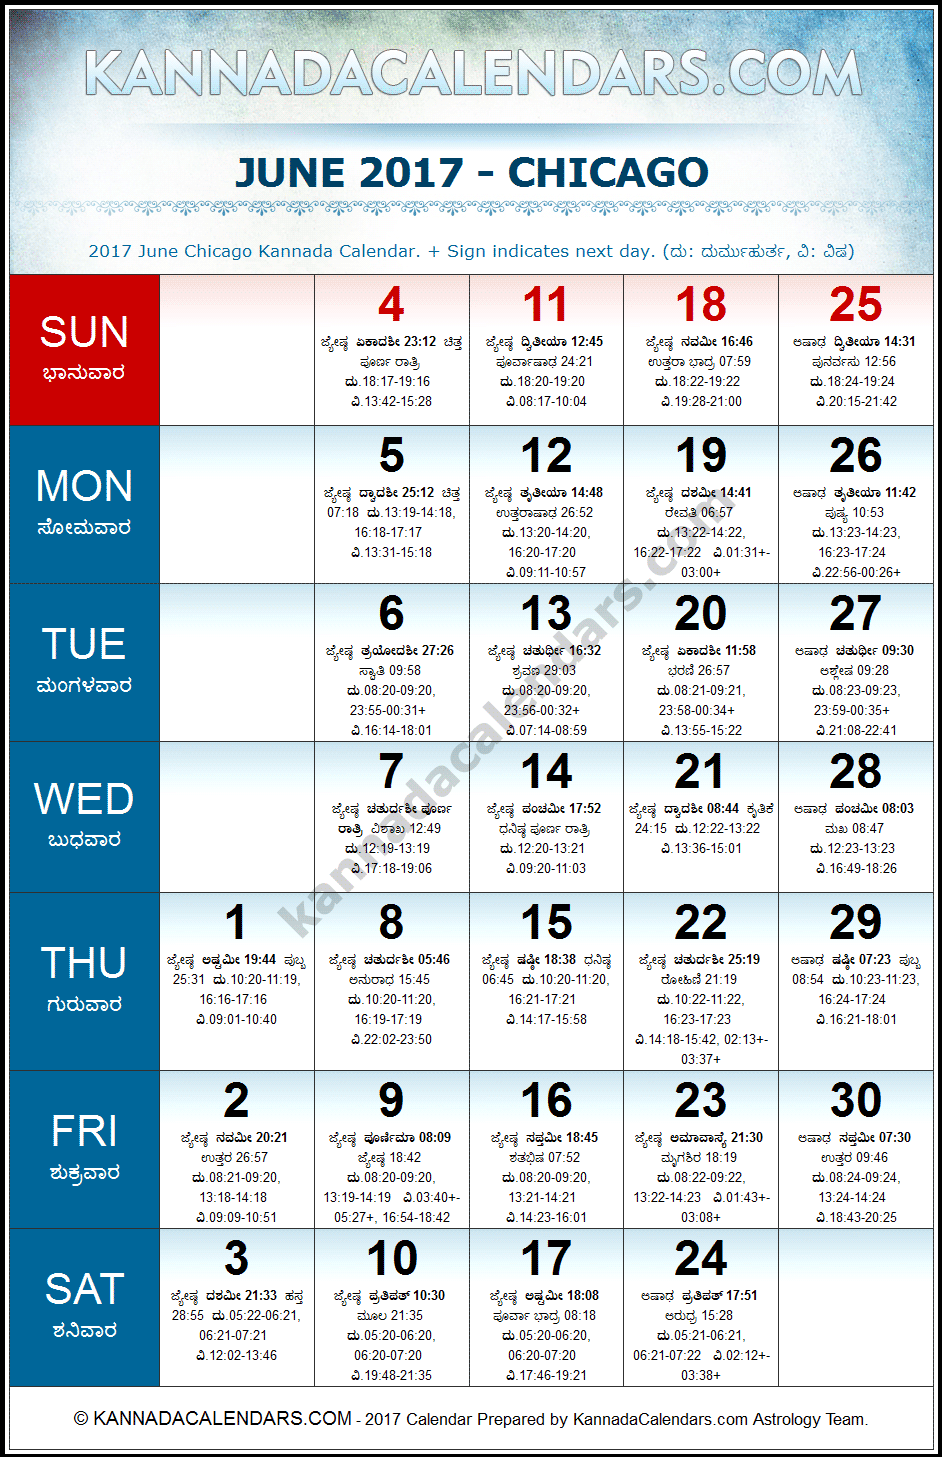 June 2017 Kannada Calendar for Chicago, USA